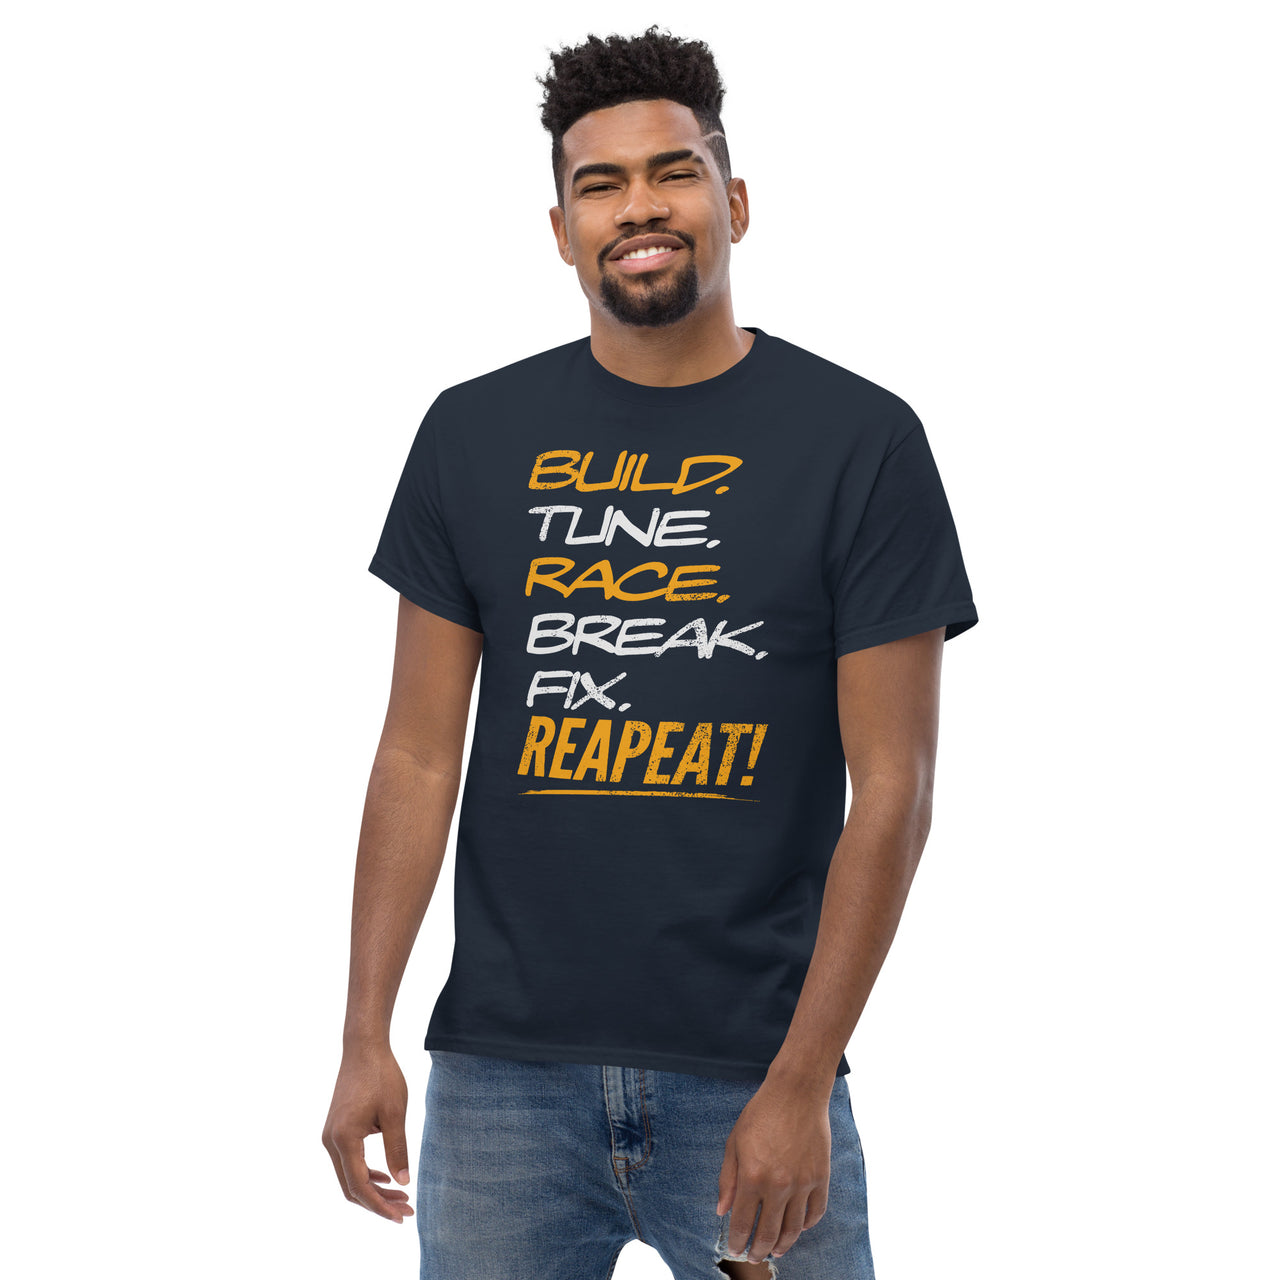 Drag Racing T-Shirt, Car Enthusiasts Tee, Racer / Racecar Lover T-Shirt modeled in navy